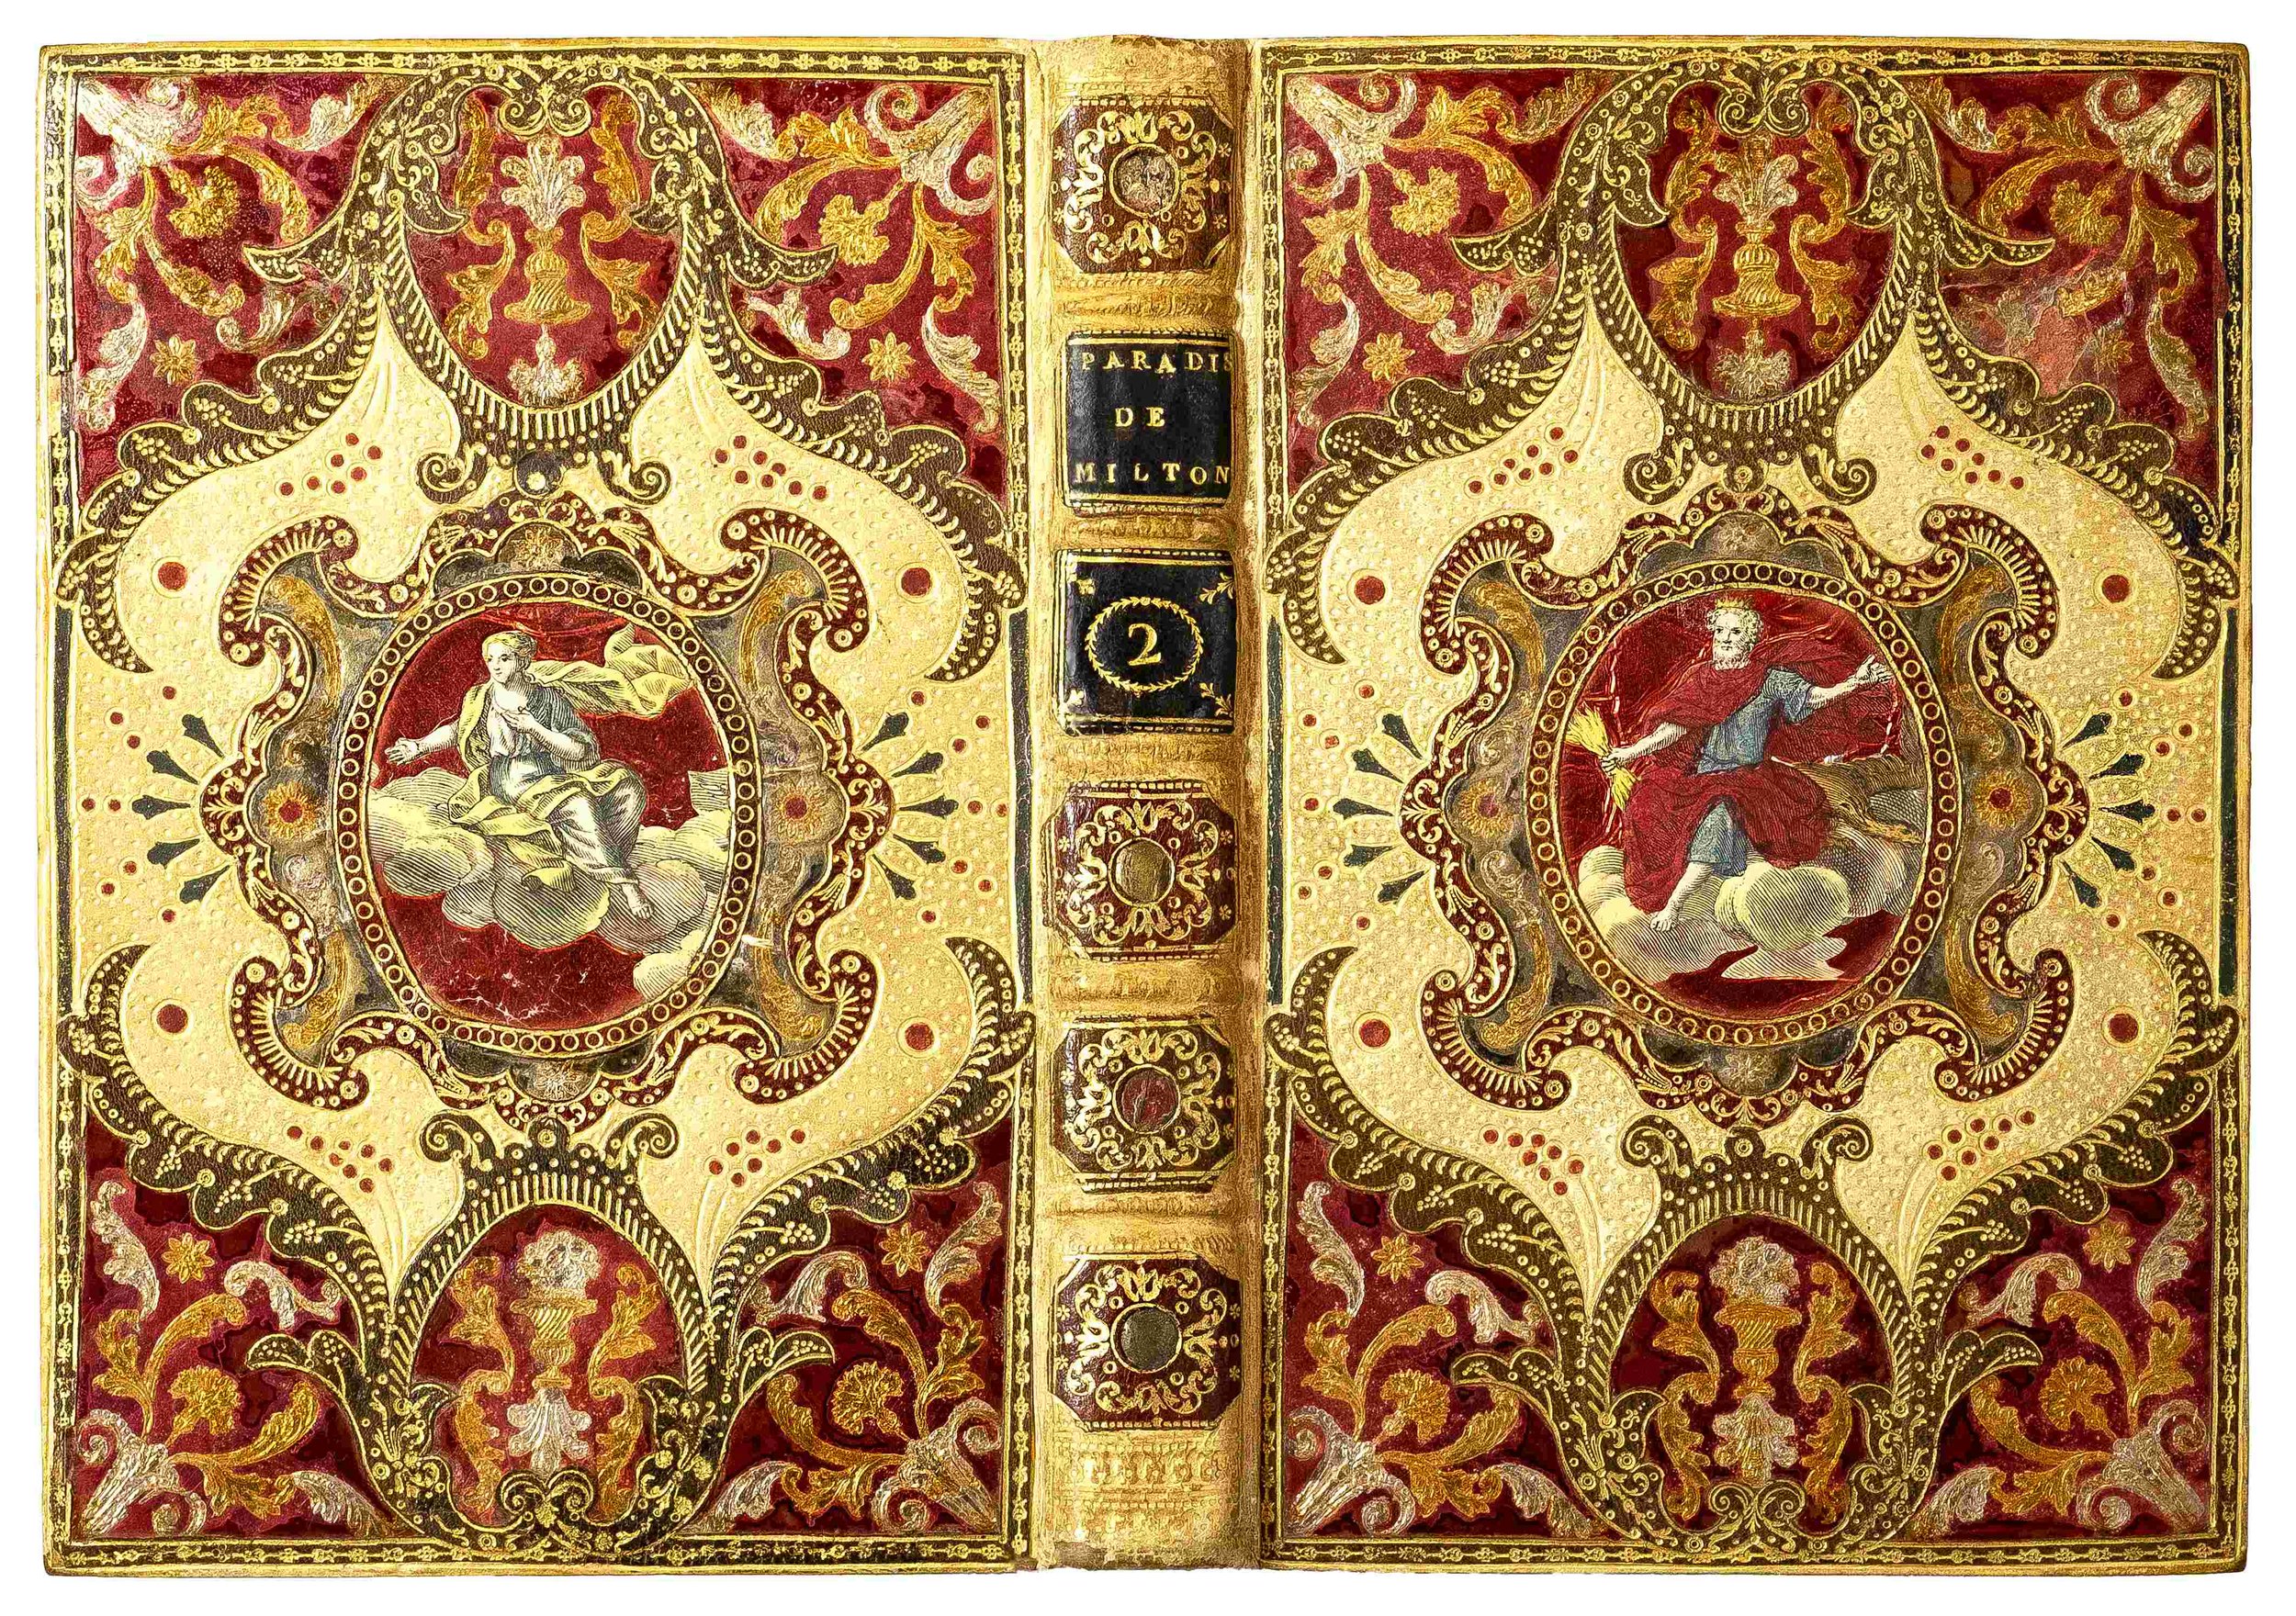 118-paradis-perdu-bradel-Inlaid-Binding-morocco-mosaic-reliure-maroquin-18th-century.jpg